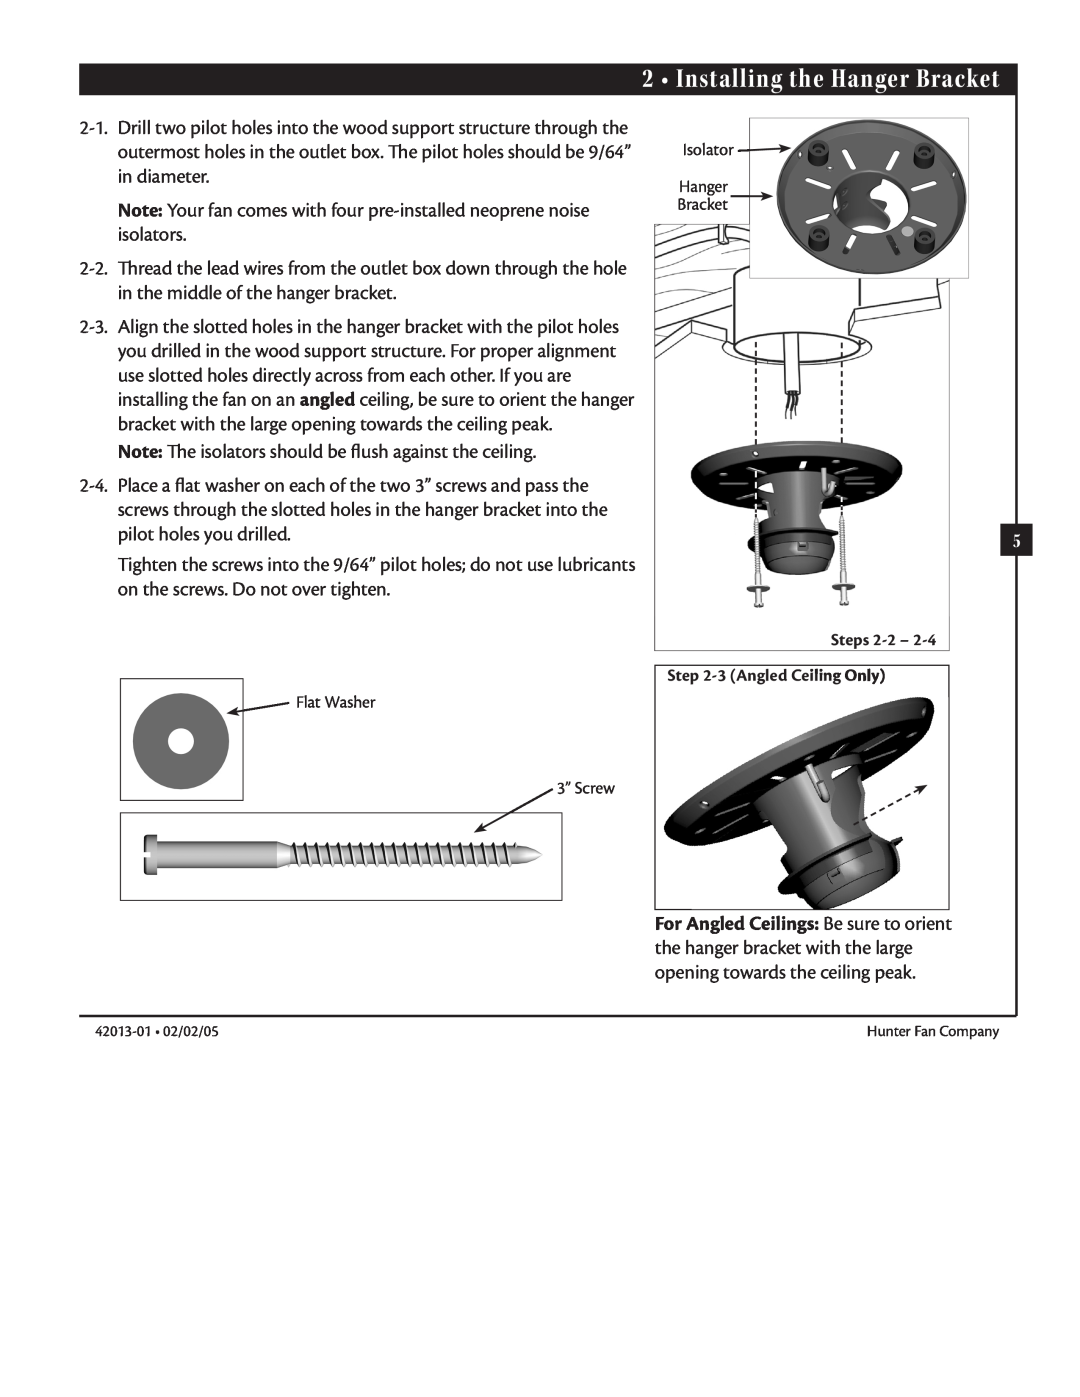 Hunter Fan 42013-01 manual Installing the Hanger Bracket, Steps 2-2- -3Angled Ceiling Only 